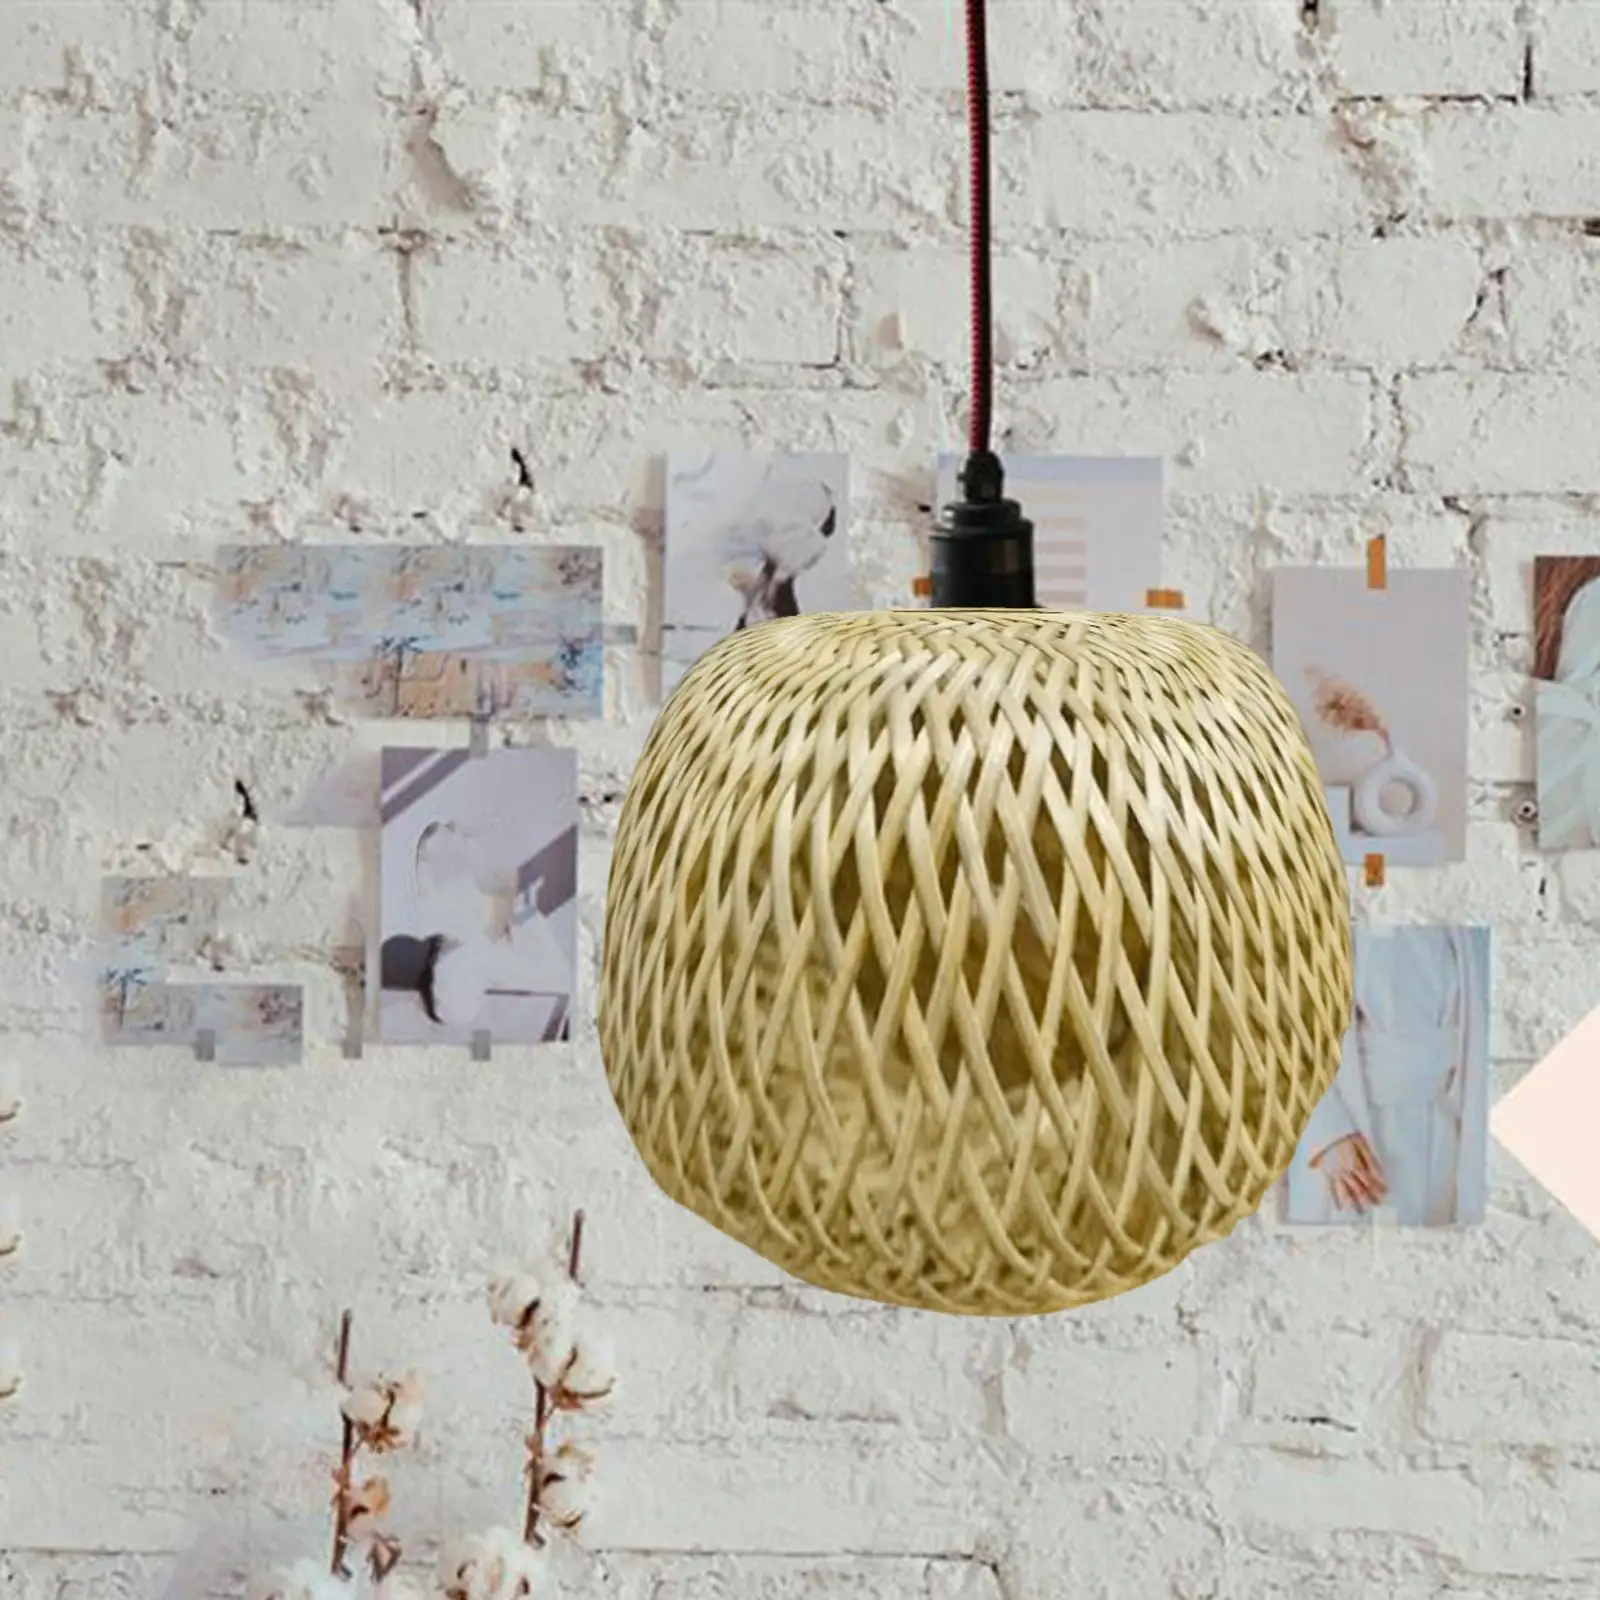 Handmade Weaving Lamp Shade Pendant Light Cover Lantern Ornament Lampshade for Bedroom Home Dining Room Living Room Decoration